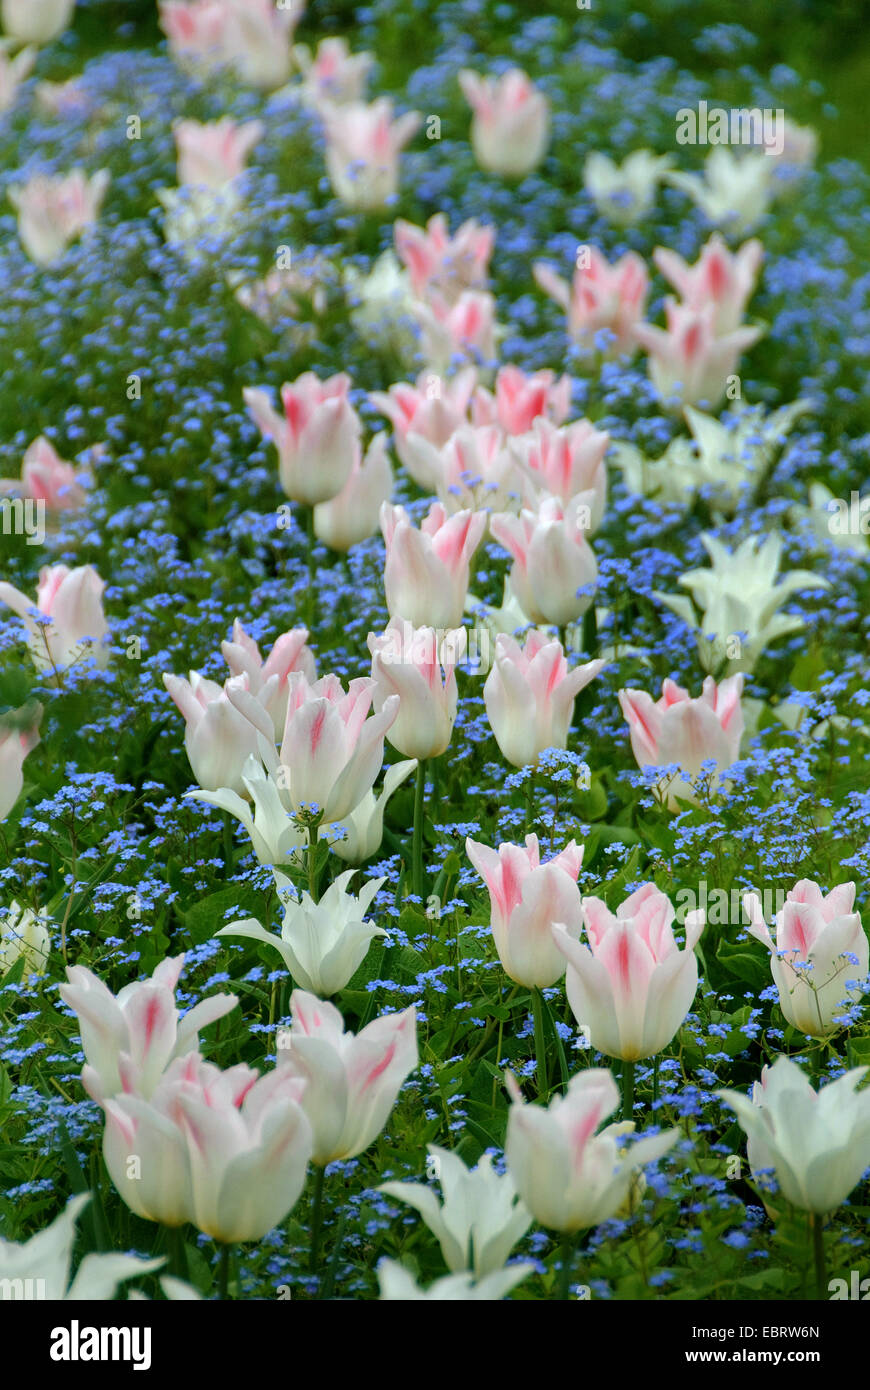 garden tulip (Tulipa 'Holland Chic', Tulipa Holland Chic), cultivar Sorte Holland Chic and cultivar Tulipa White Trumphator Stock Photo